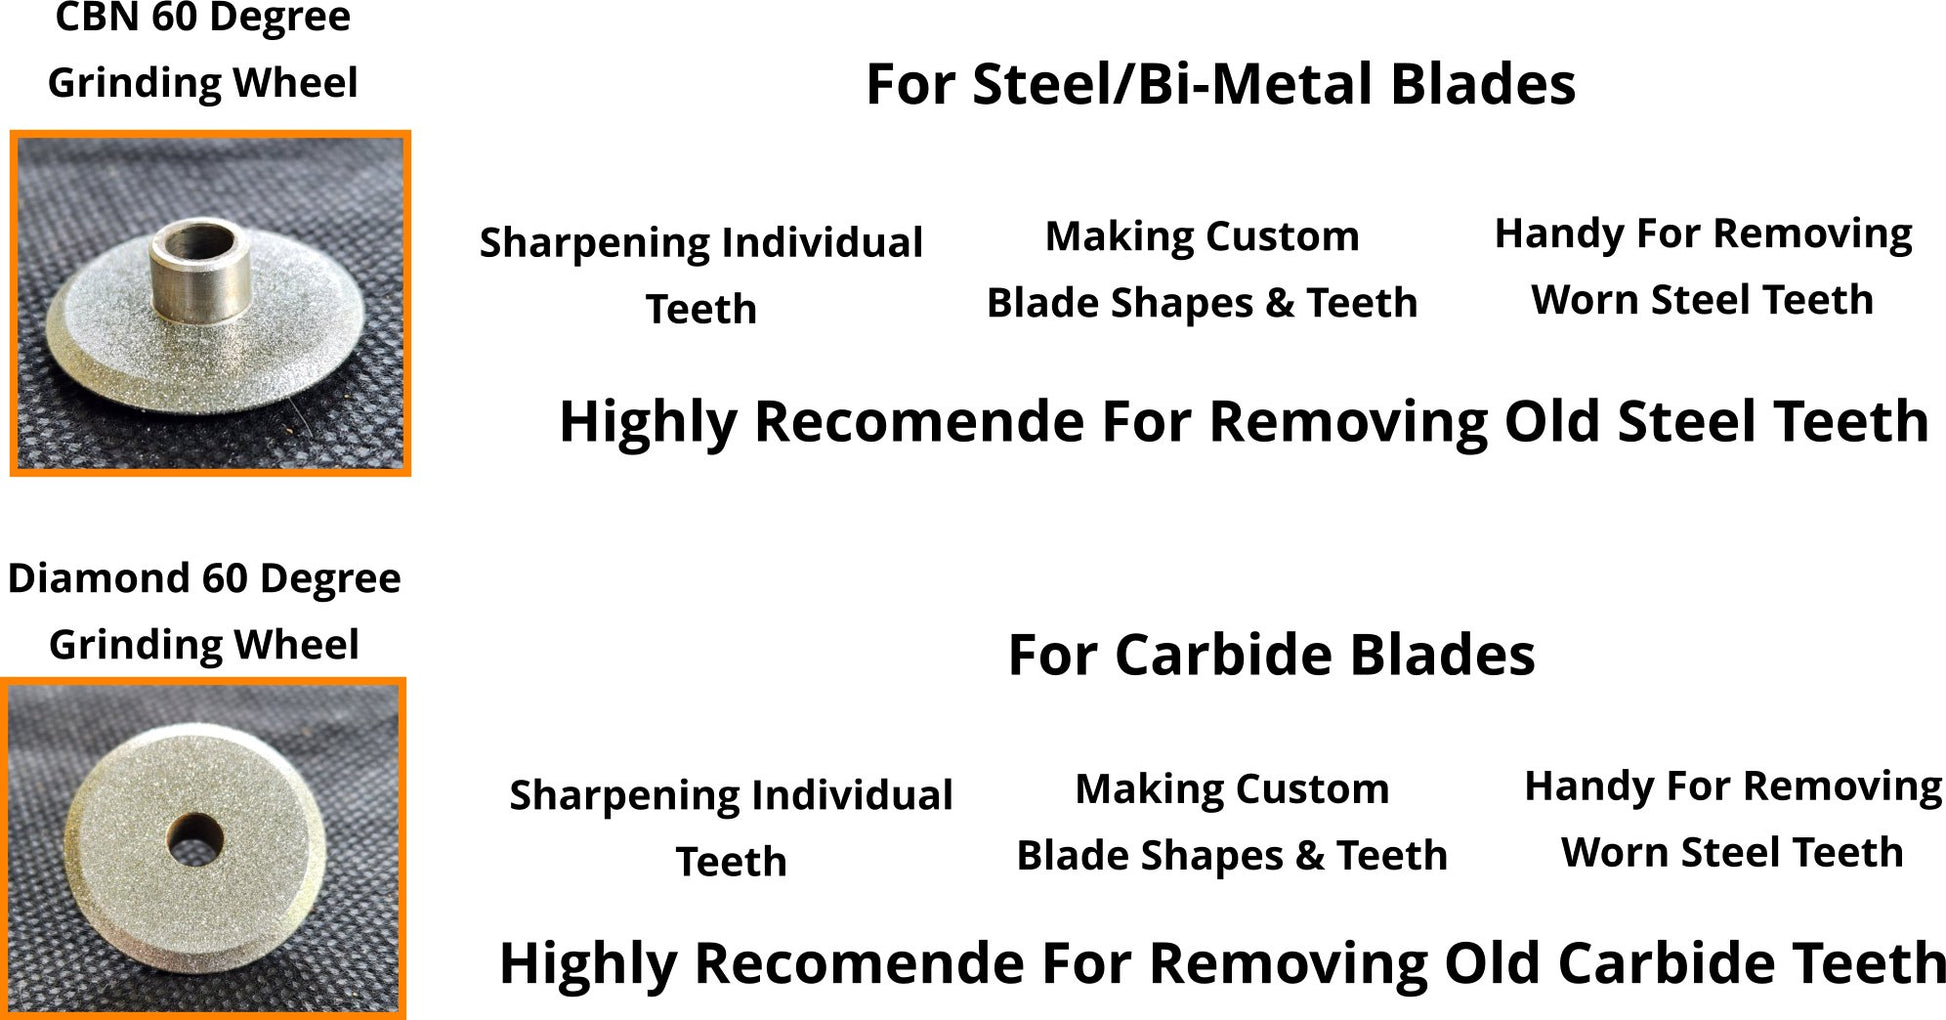 Diamond 60 Degree Grinding Wheel For Carbide - Tigers Teeth Blades